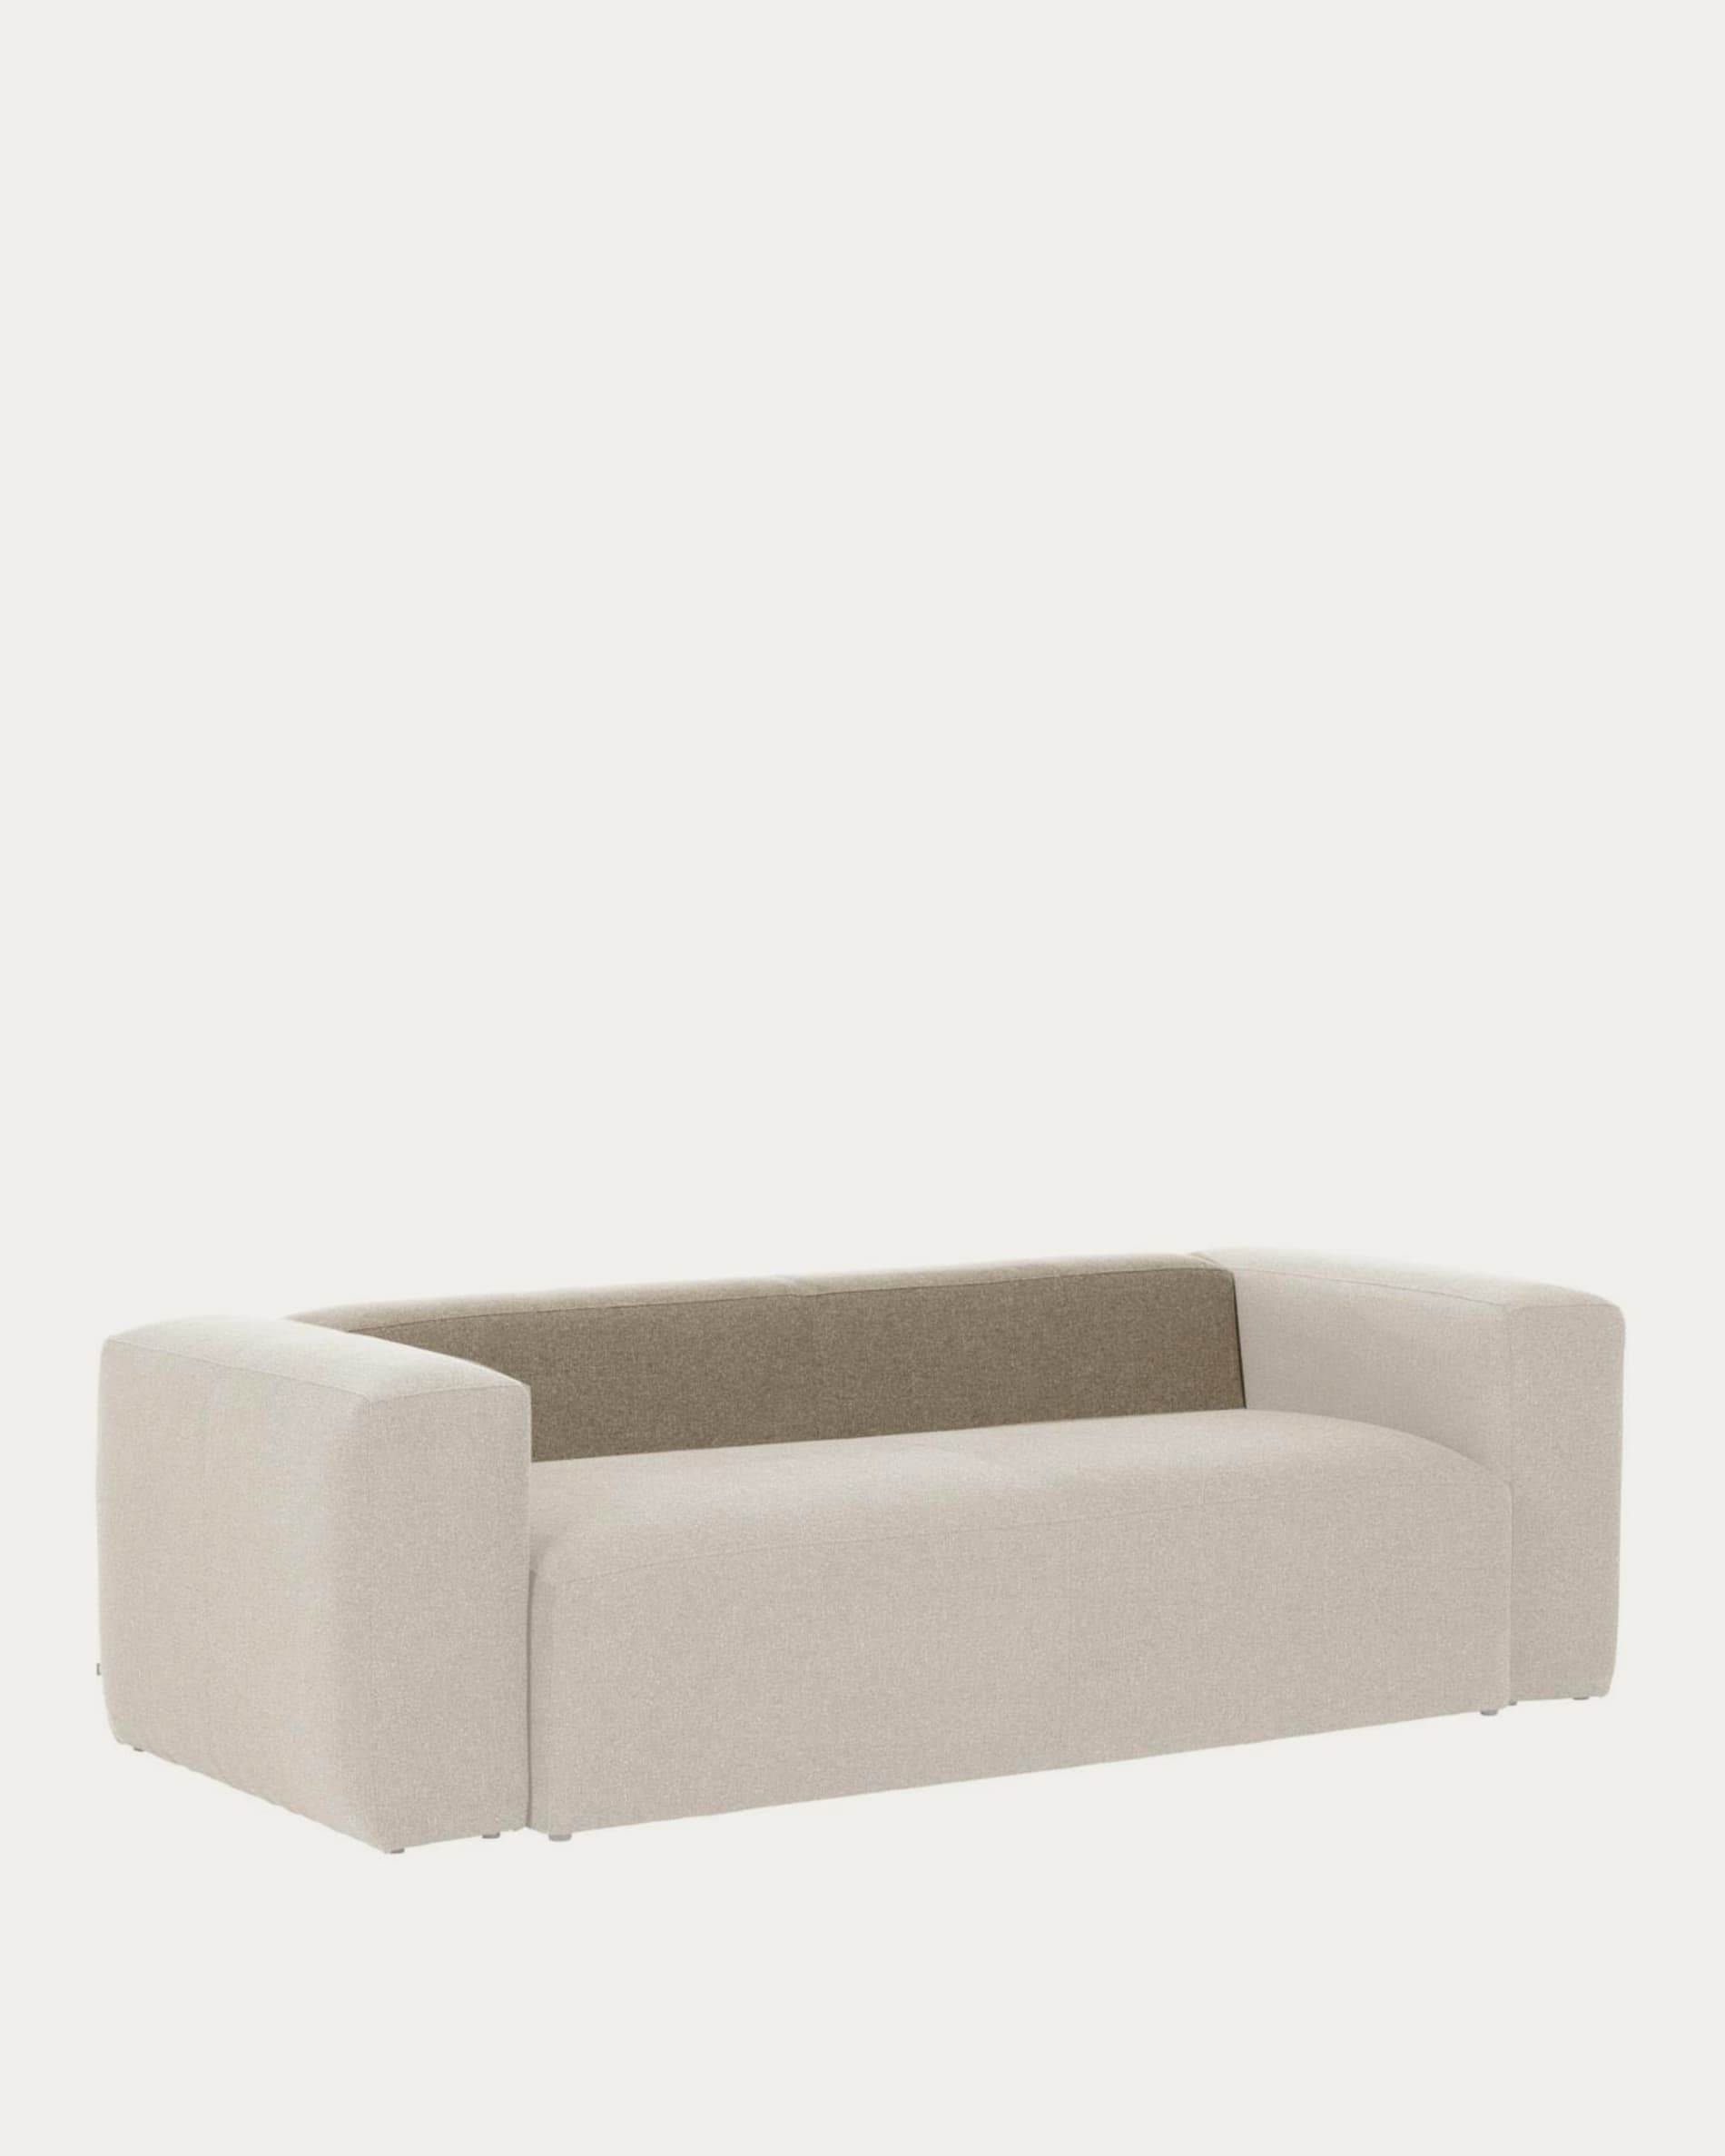 Respaldo sofá Blok beige 150 cm